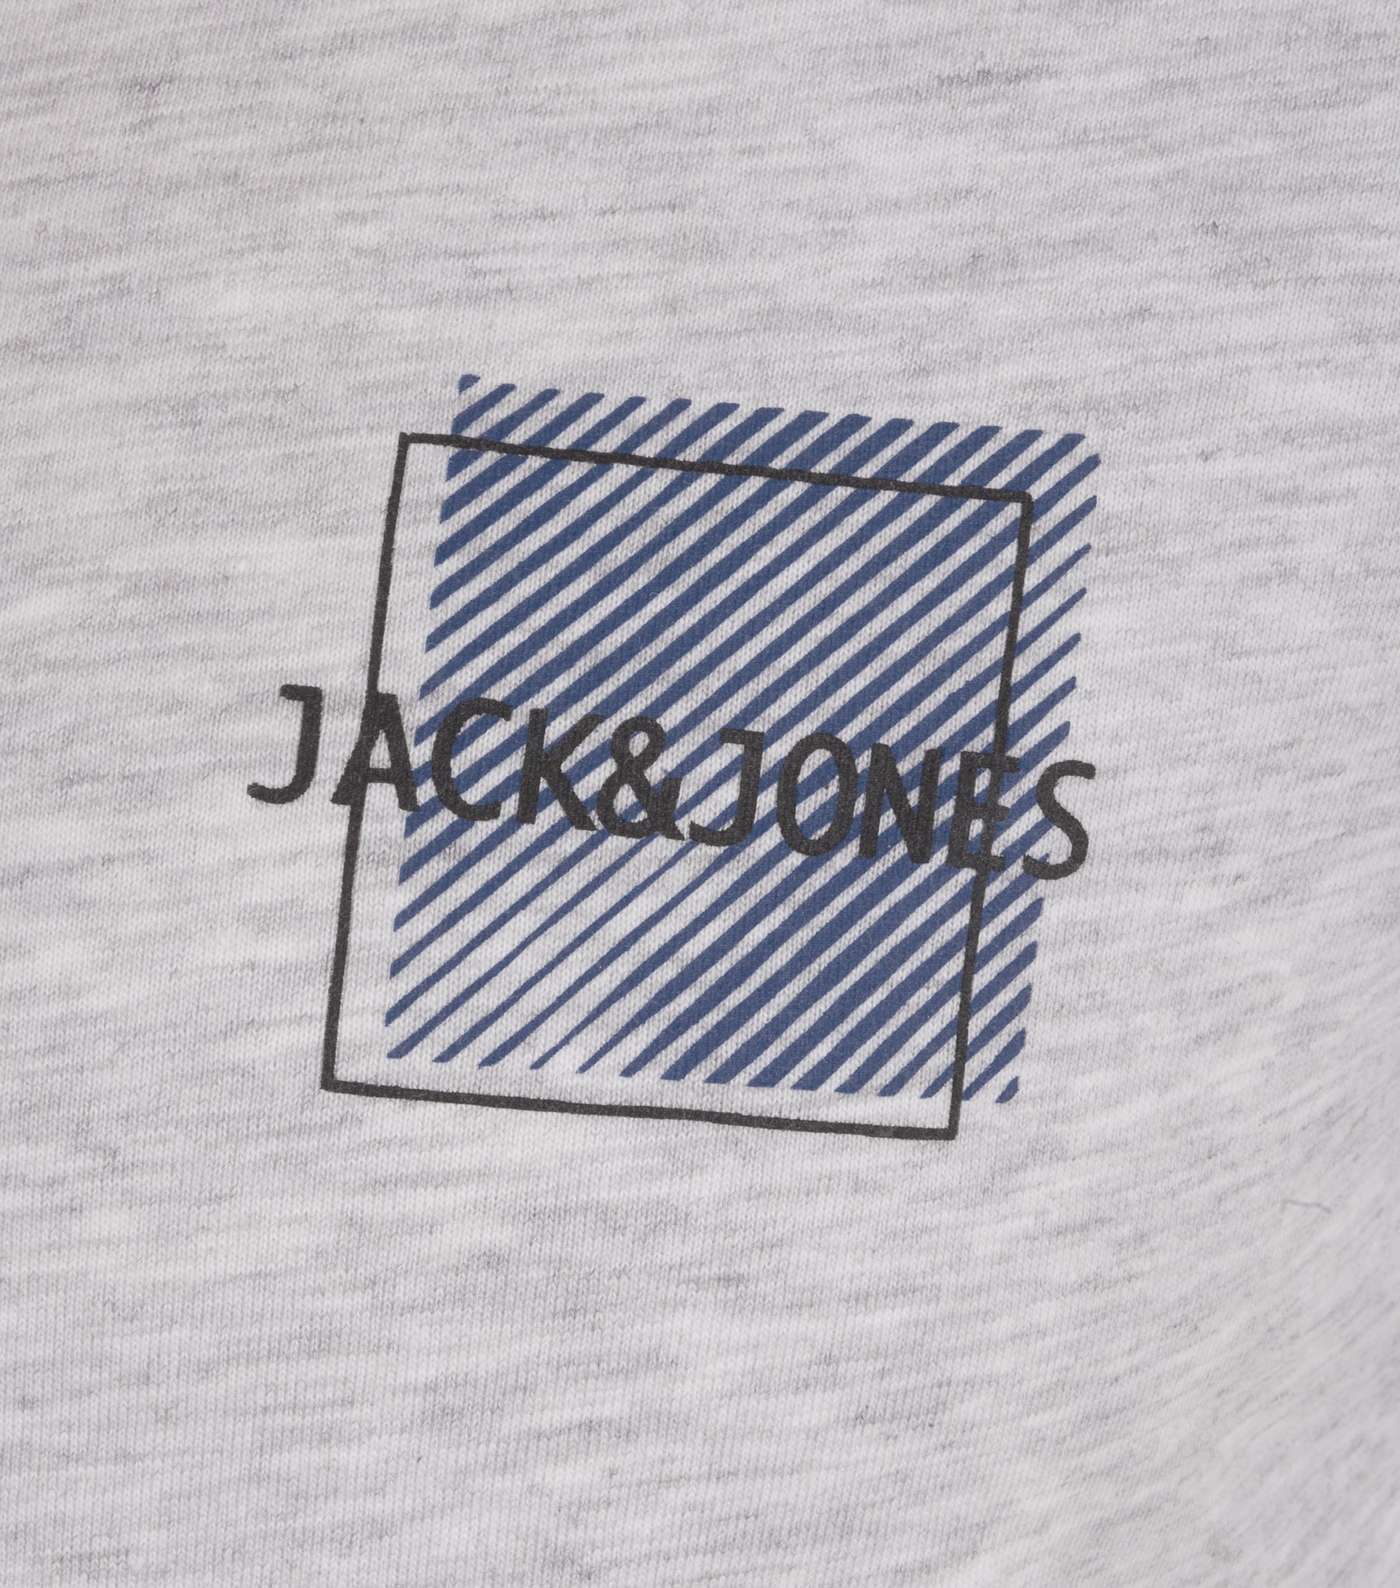 Jack & Jones Pale Grey Square Logo T-Shirt Image 3